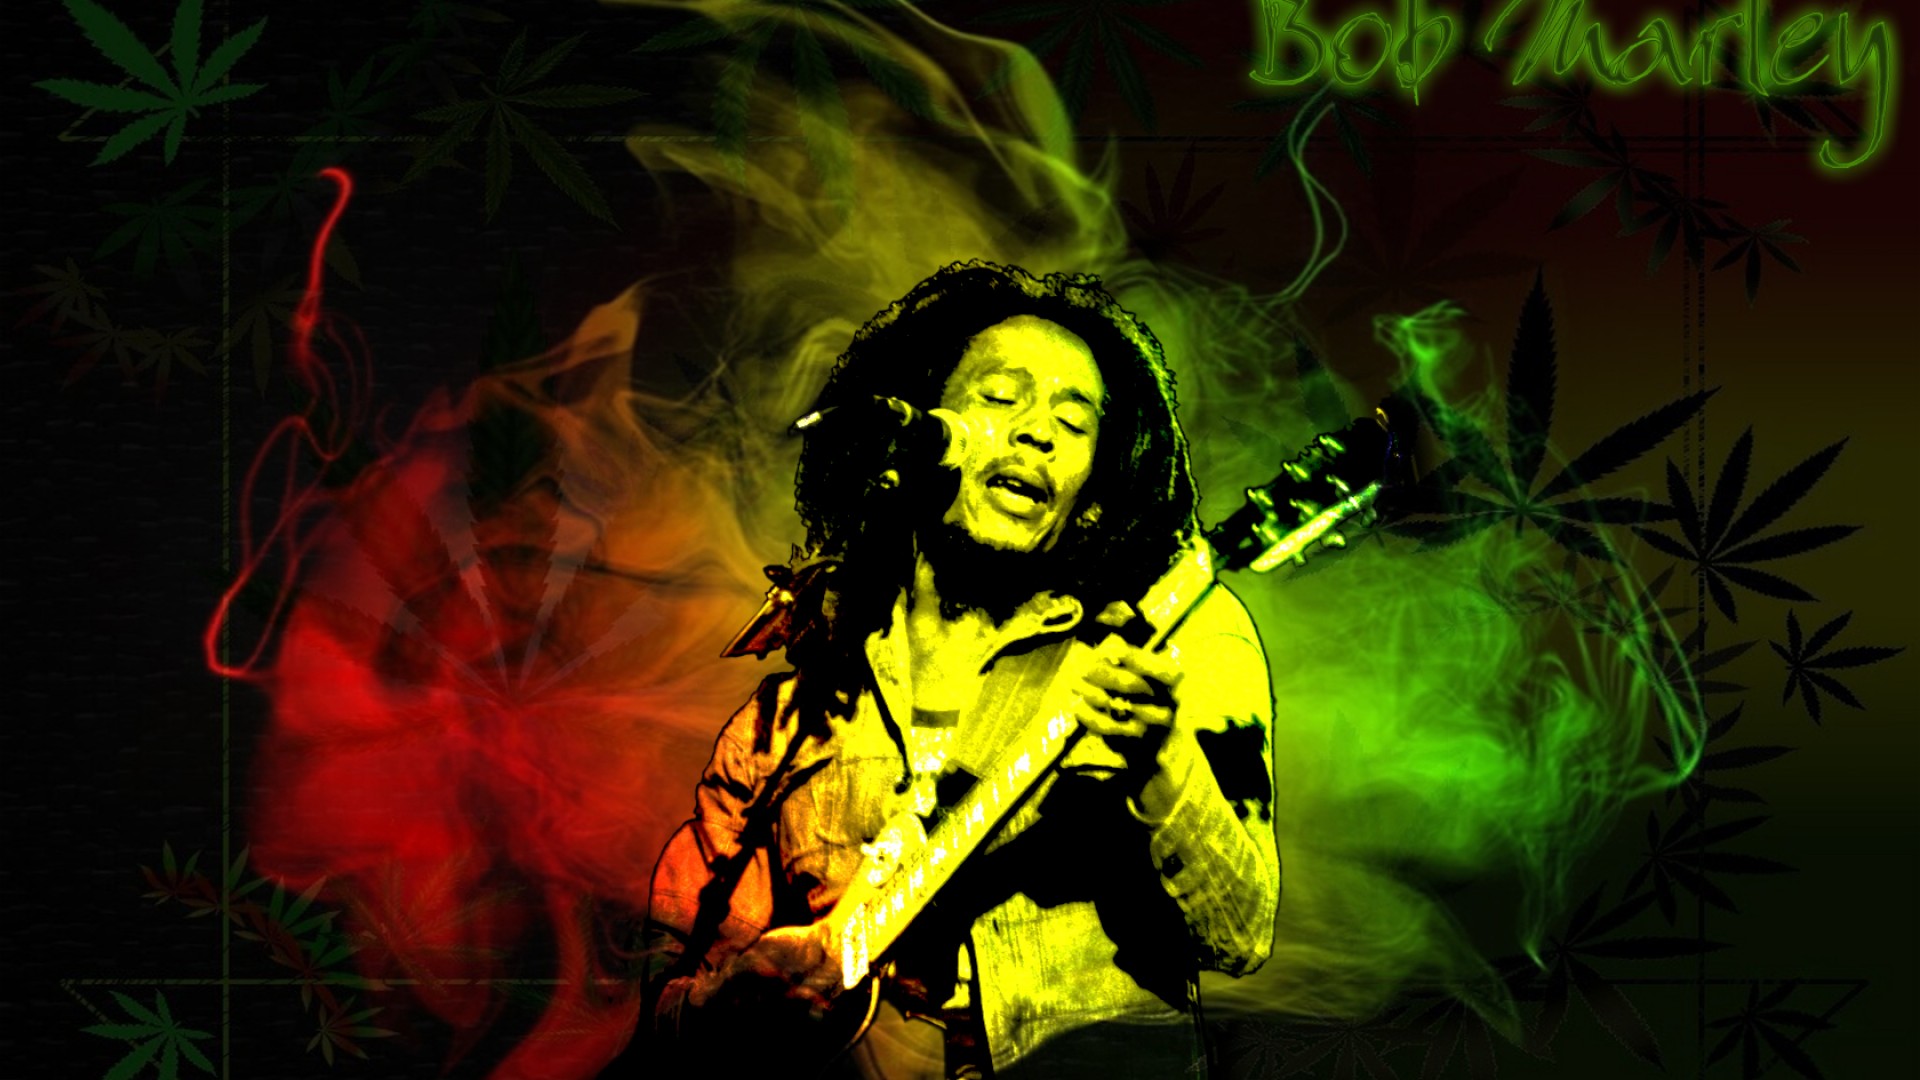 Free Download Bob Marley Hd Wallpapers For Desktop Download 19x1080 For Your Desktop Mobile Tablet Explore 74 Bob Marley Hd Wallpaper Bob Marley Quotes Wallpaper Bob Marley Live Wallpaper